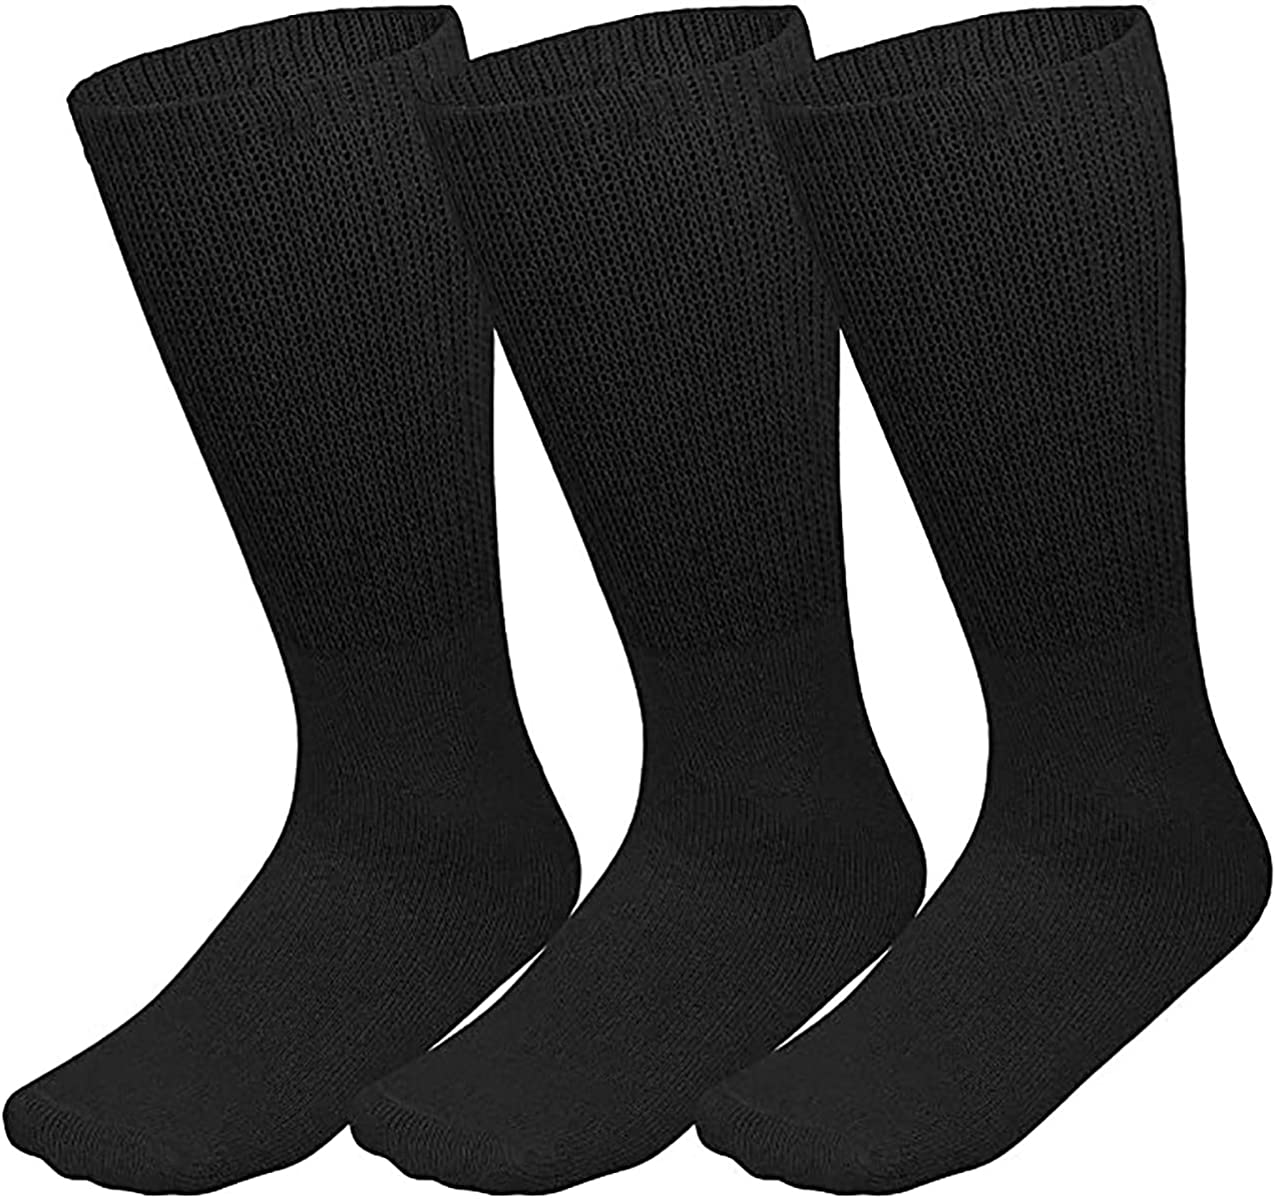 Comfort Doctor Approved Diabetic Crew Socks, Non-Binding Circulatory Cotton Cushion Crew Socks For Men’s Women’s 3-Pairs Socks Size 13-15